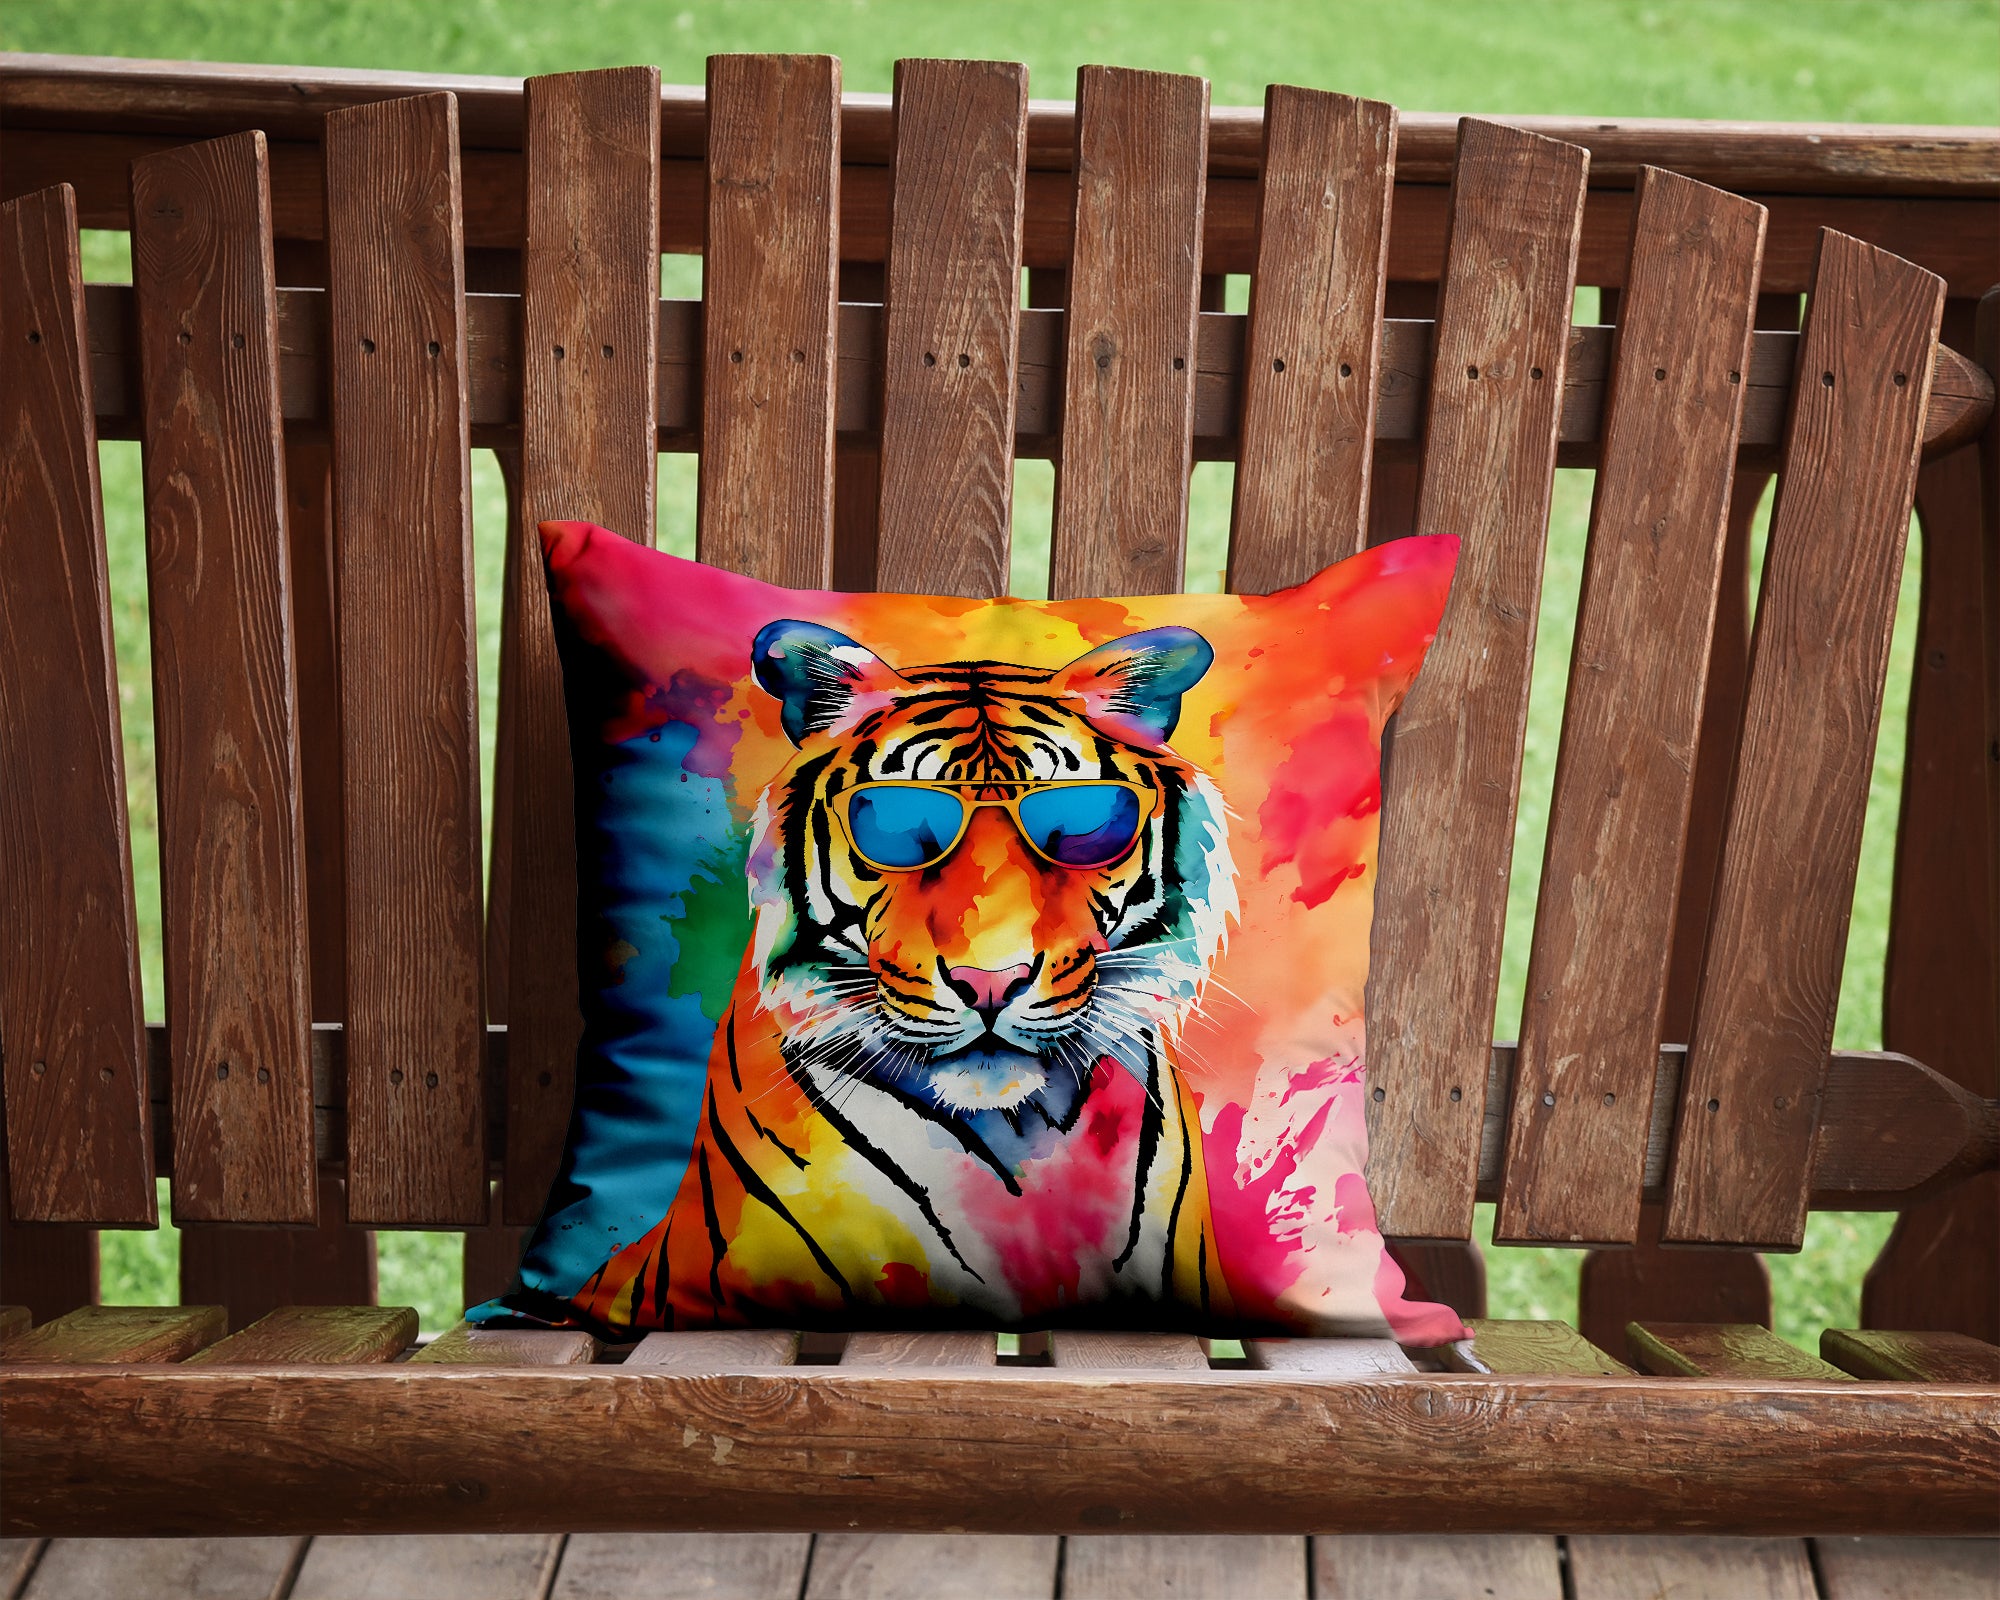 Buy this Hippie Animal Bengal Tiger Throw Pillow